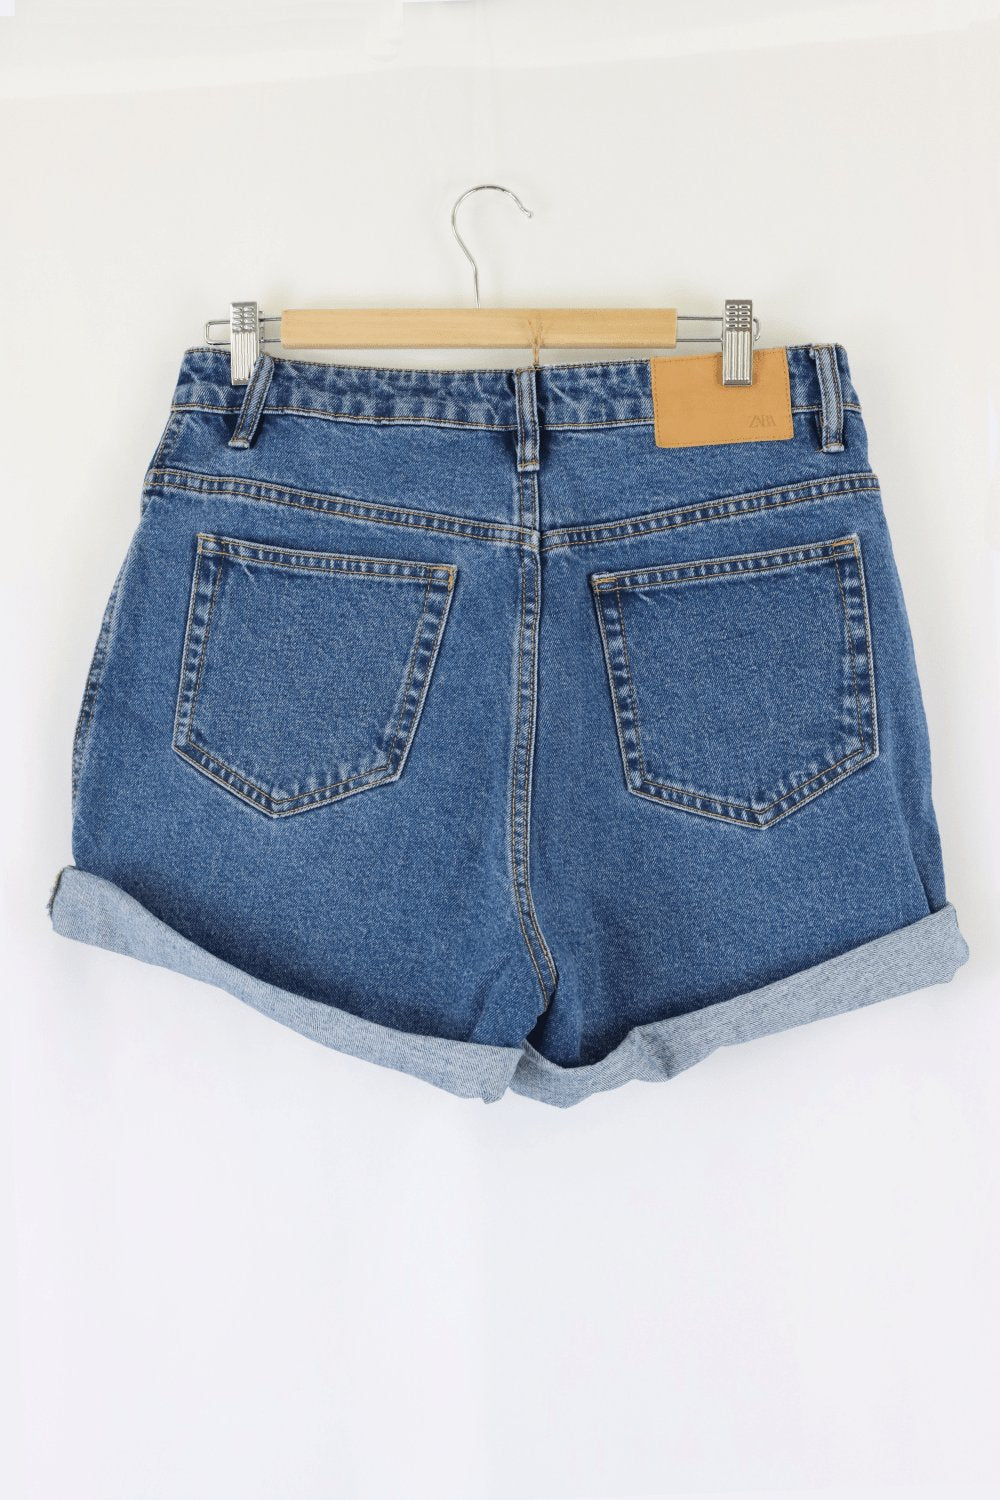 Zara Denim Blue Shorts 12